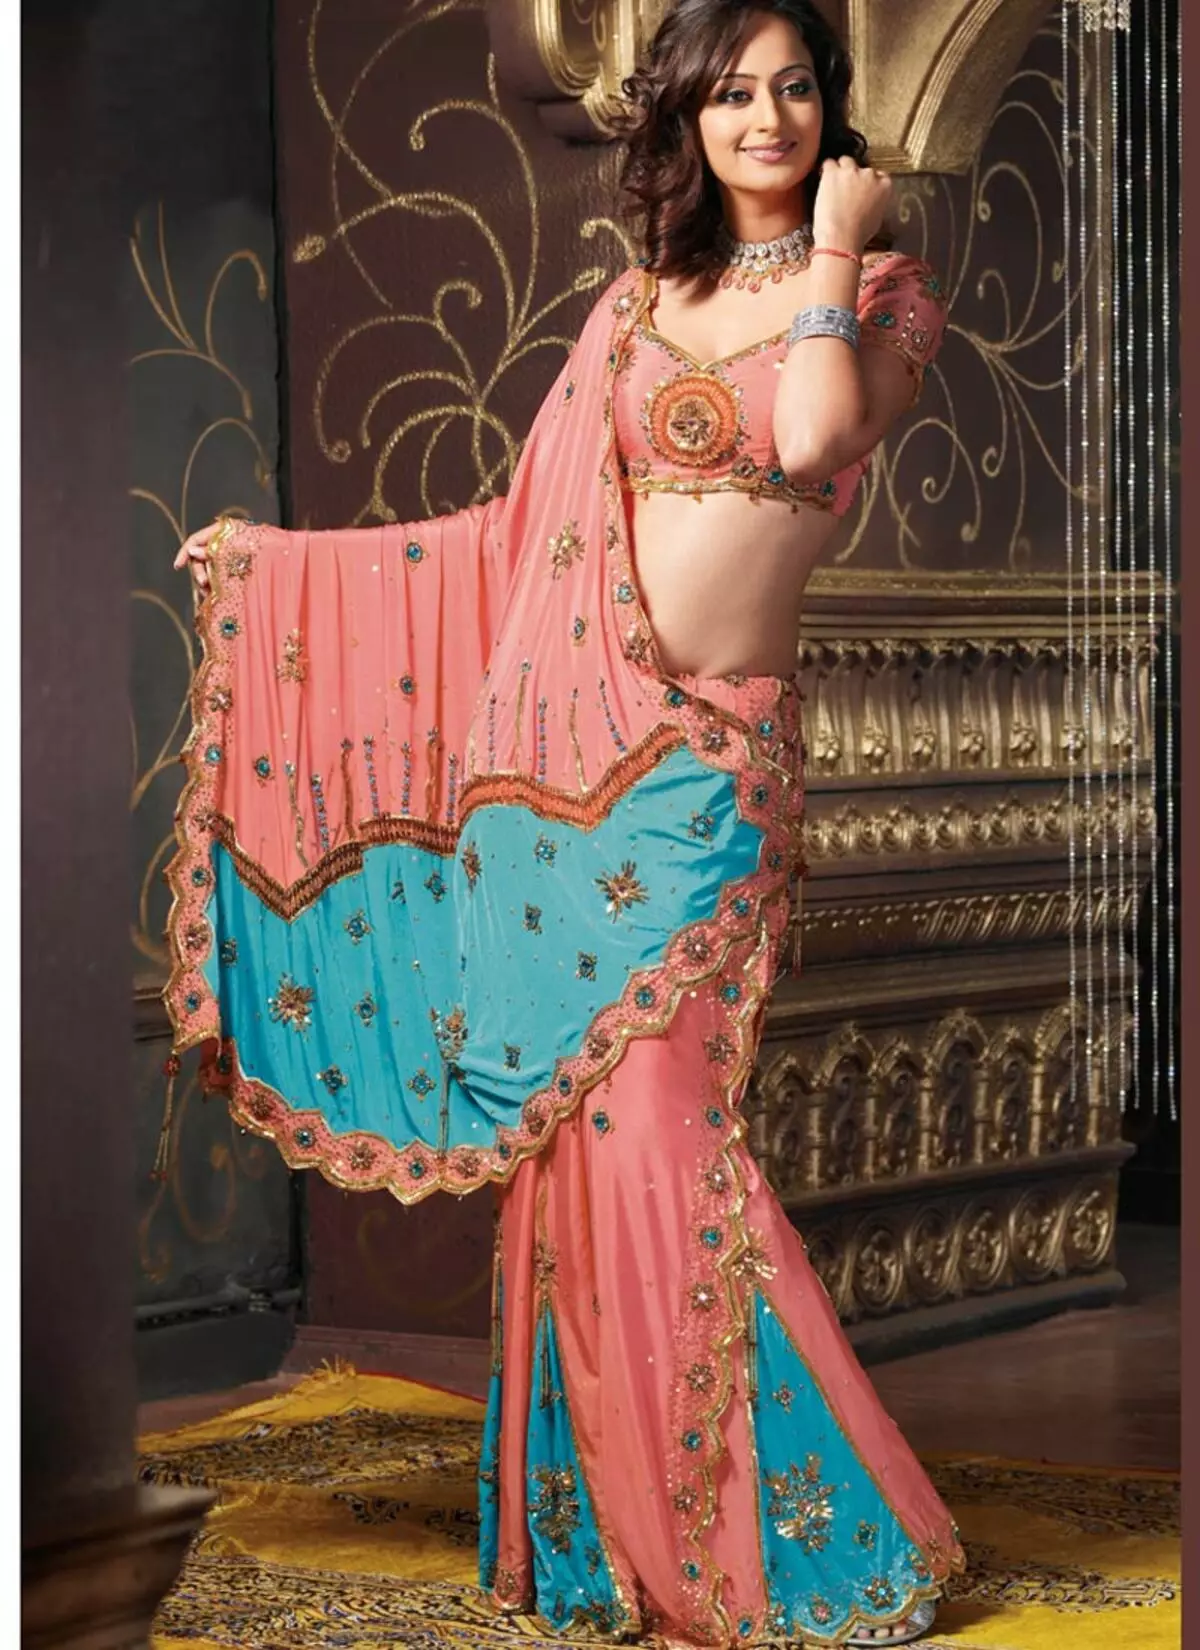 Игра сари. Индия женщины в Сари. Сари одежда женщин в Индии. Танцовщица Сари Индия. Индийские Сари 3д.